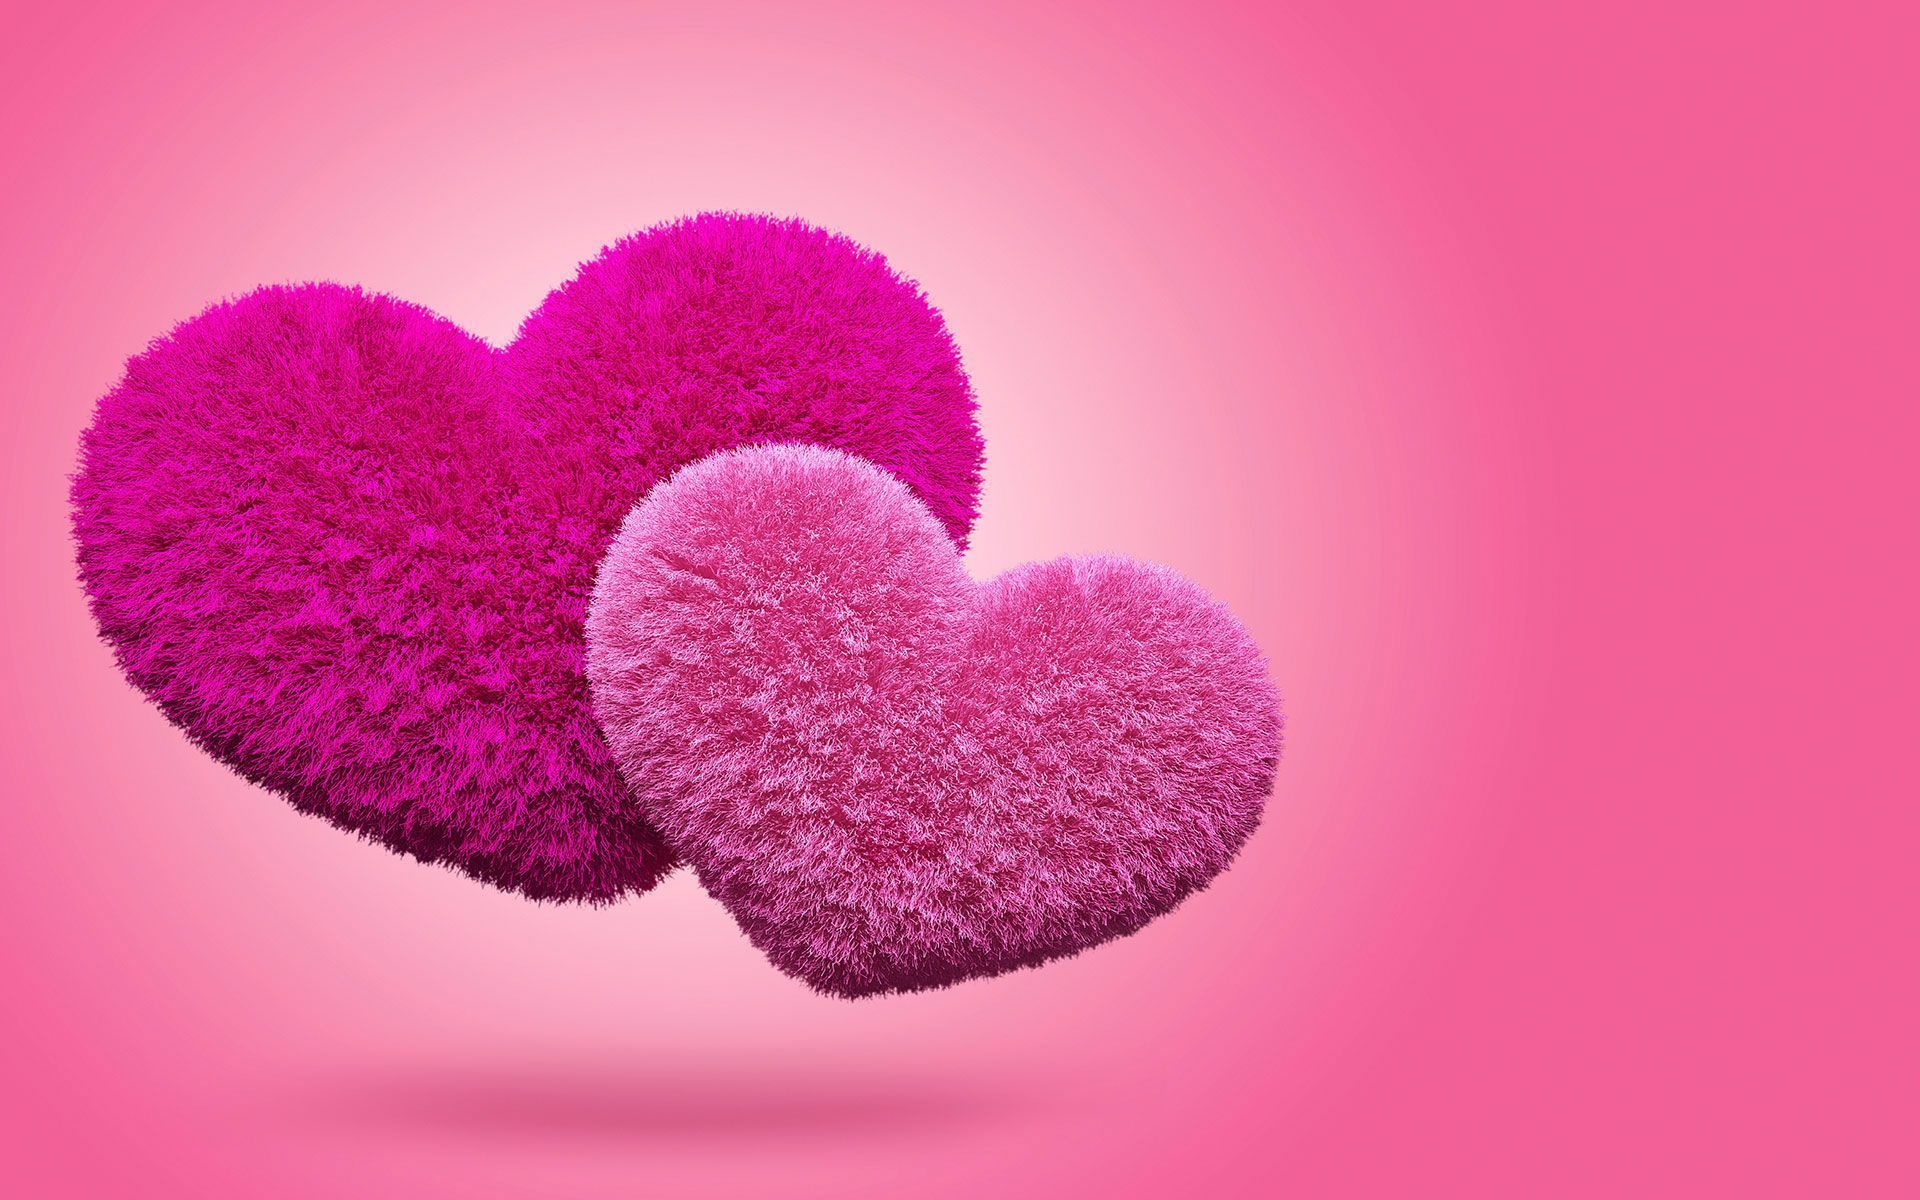 Beautiful Pink Heart wallpaper by KishoRupa  Download on ZEDGE  08fa